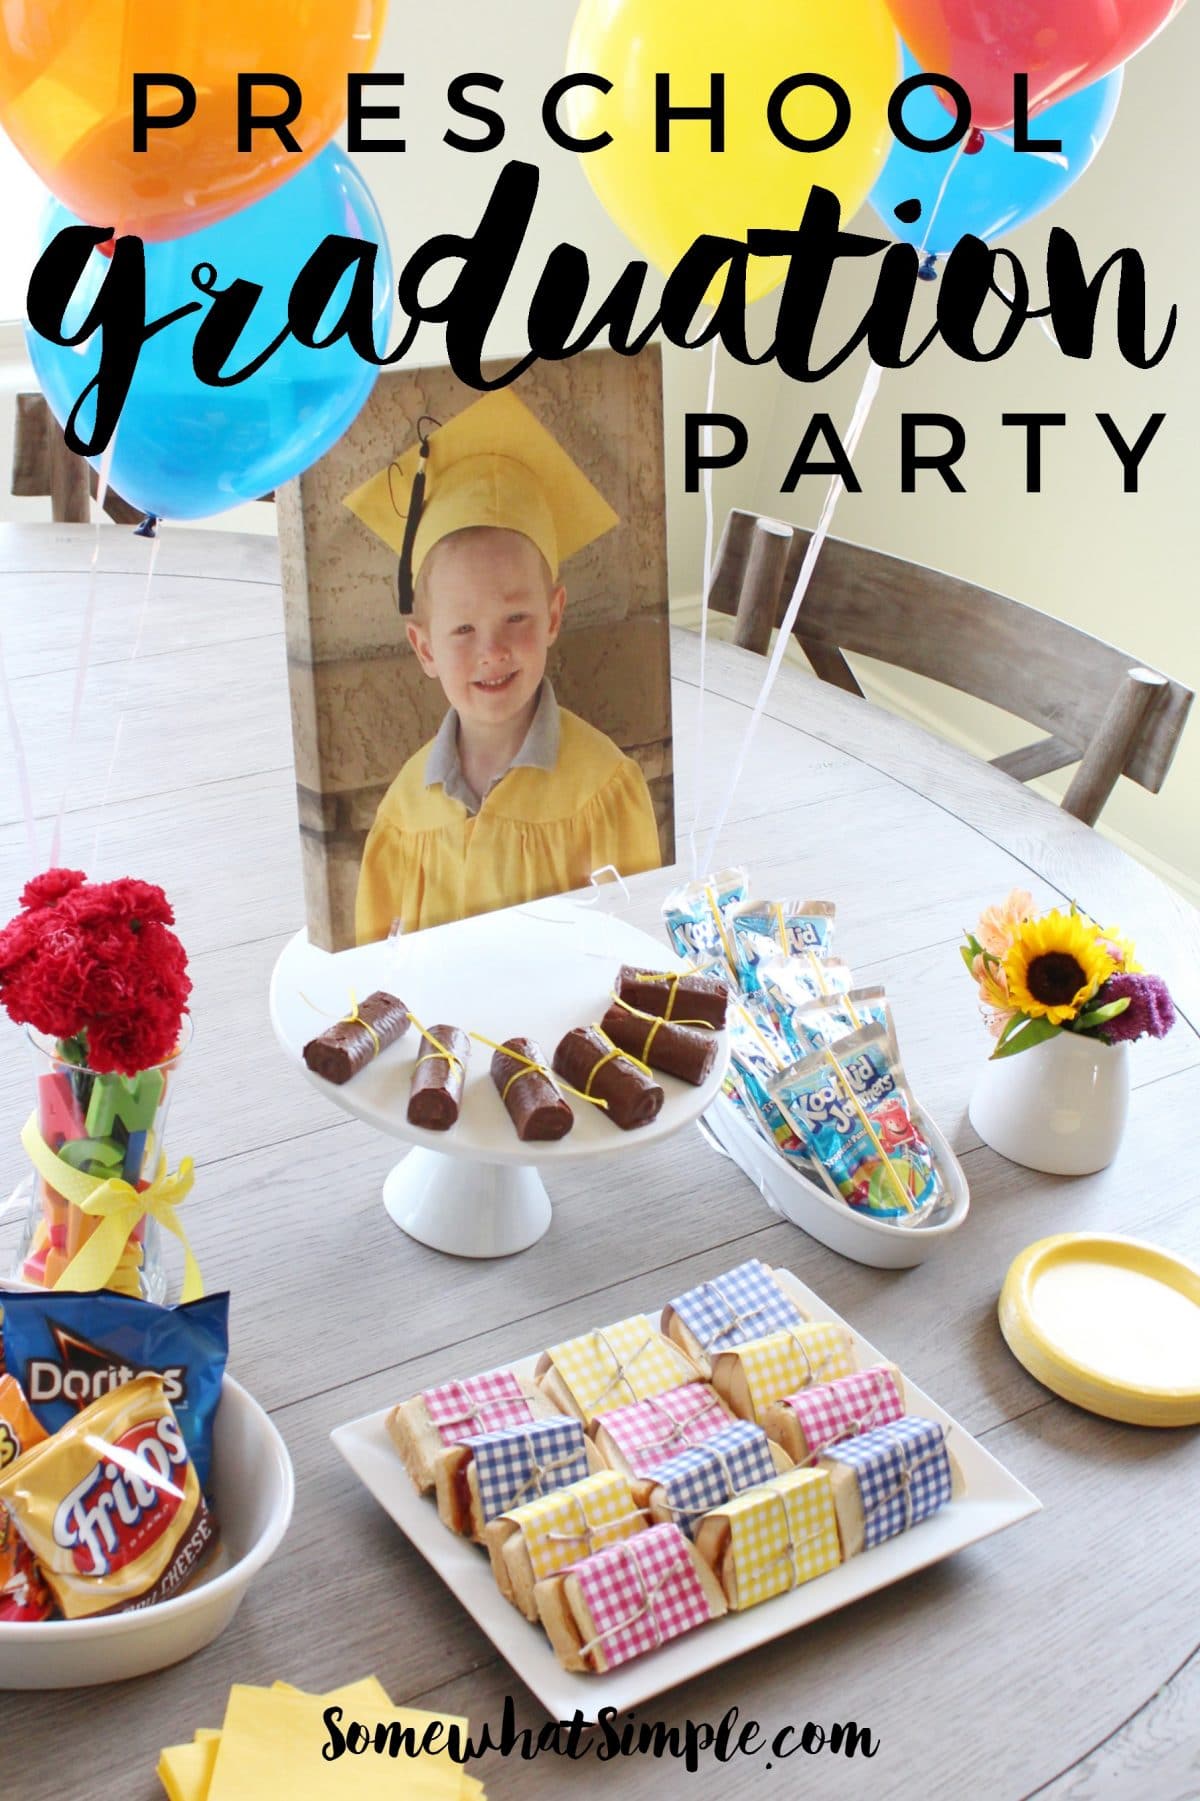 Preschool Graduation Party Somewhat Simple